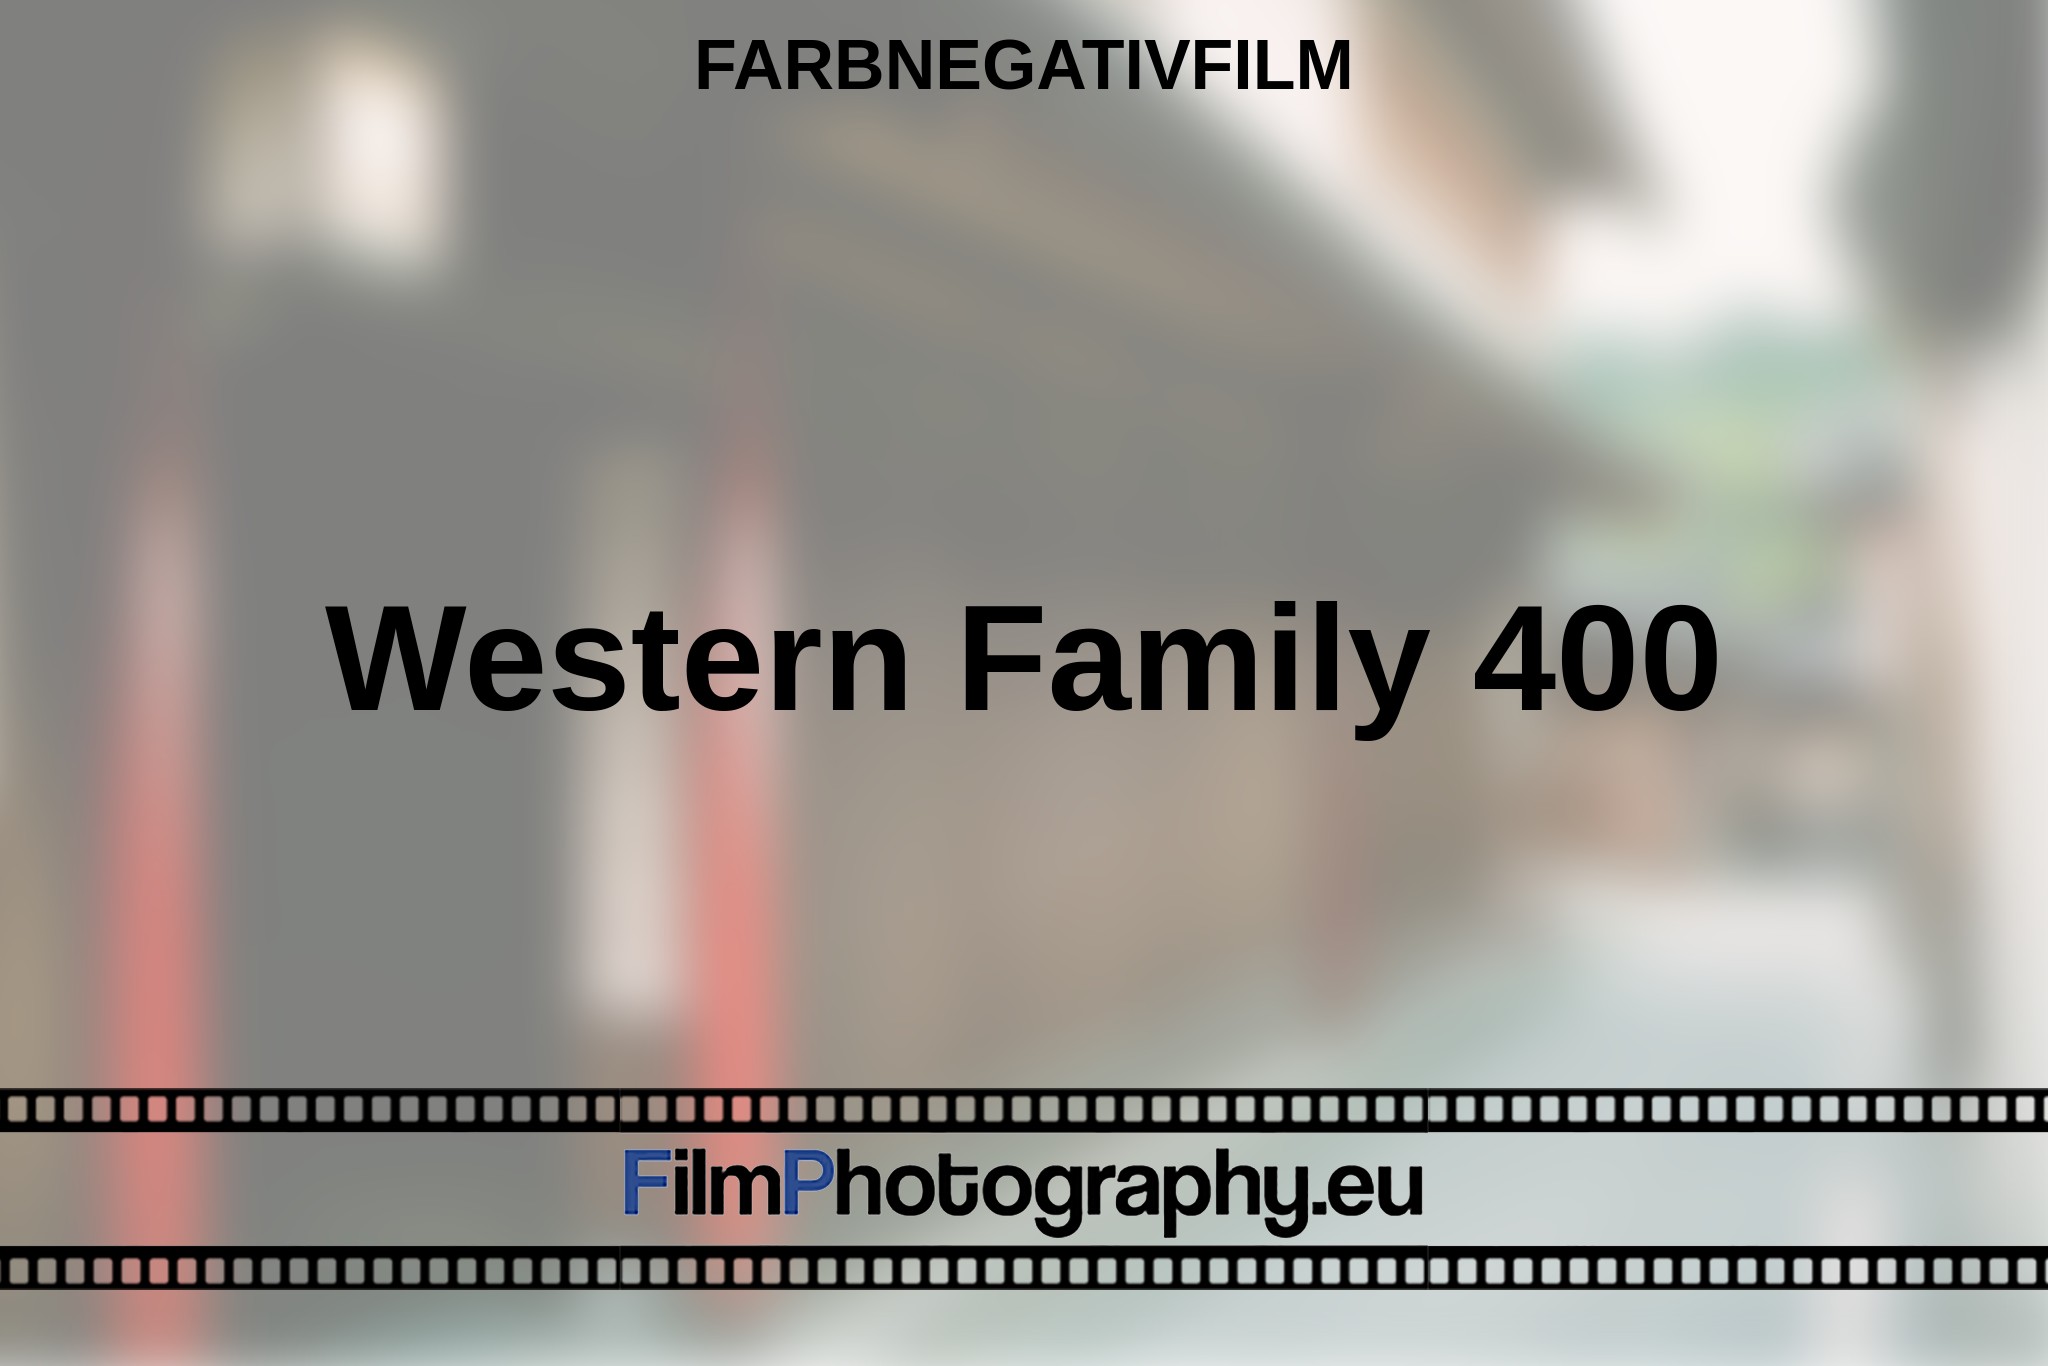 western-family-400-farbnegativfilm-bnv.jpg